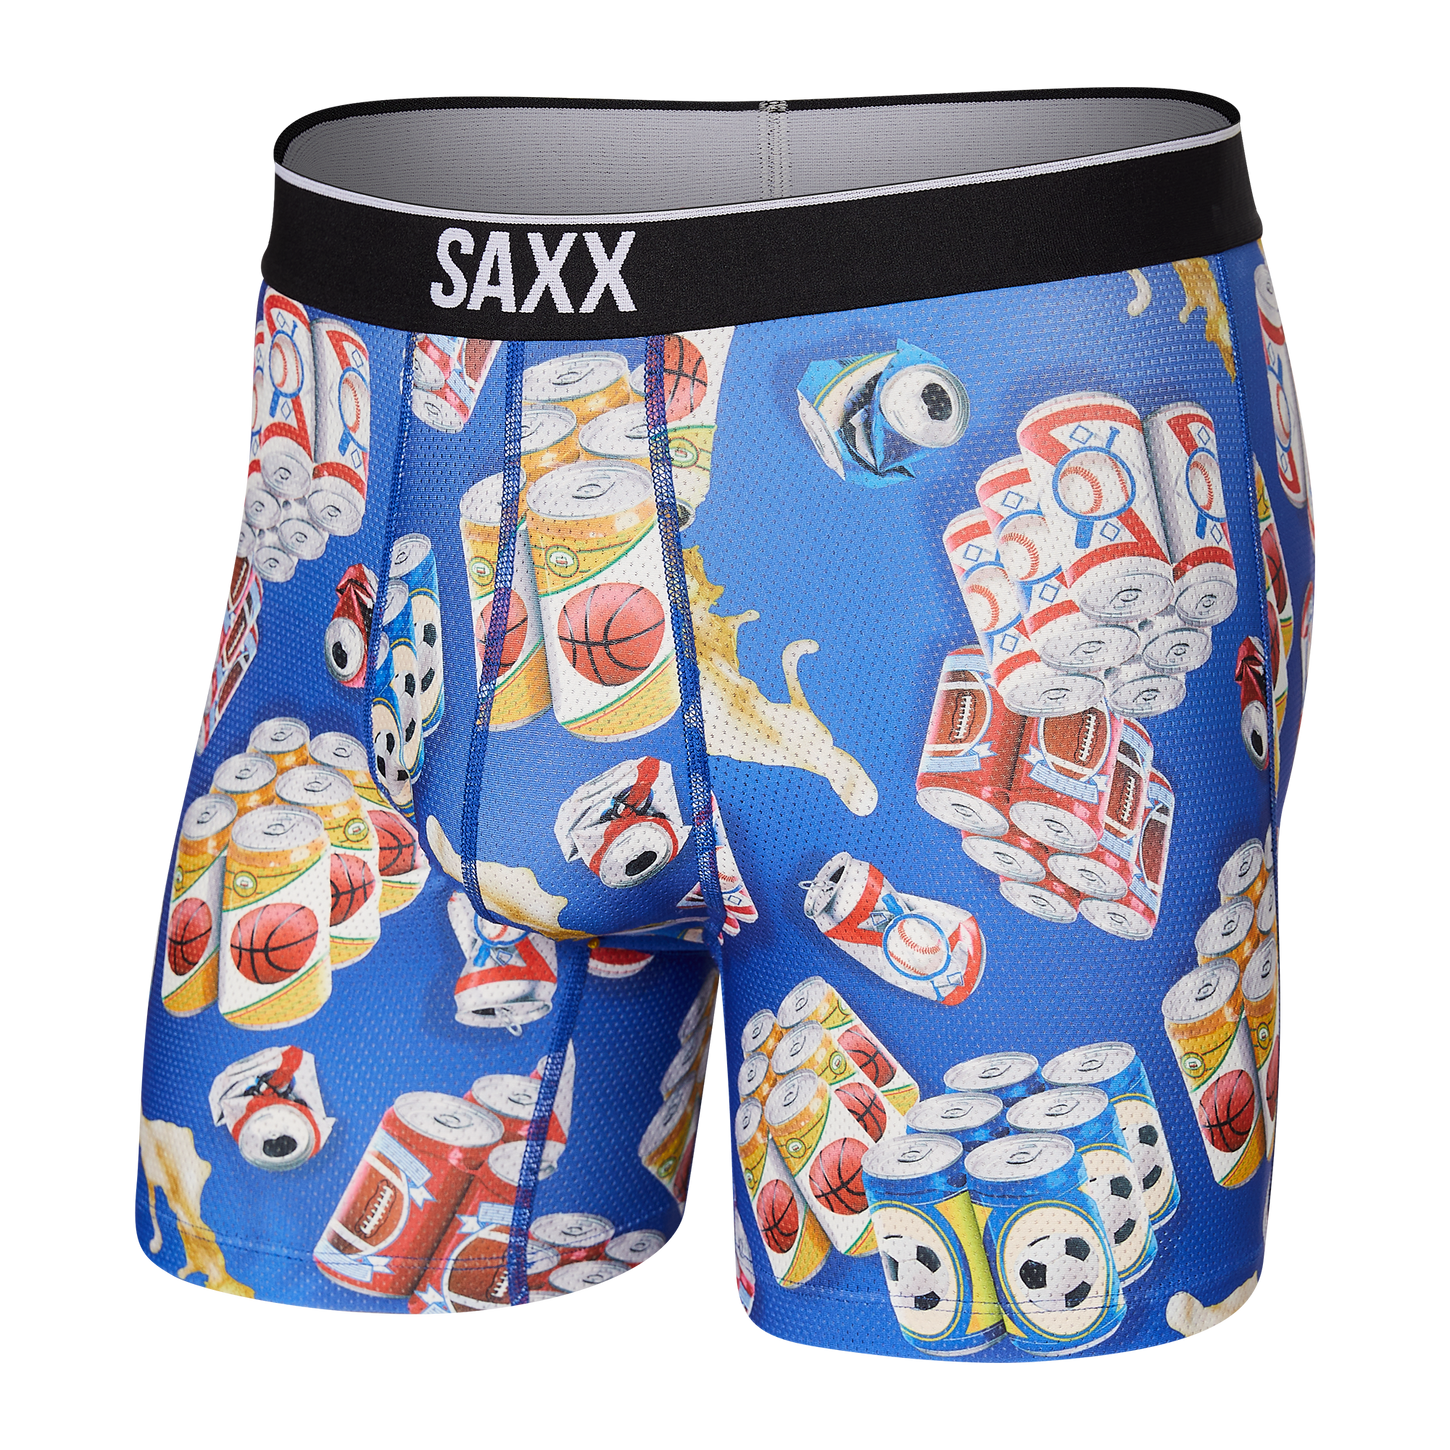 Saxx Men's Volt Boxer Brief Apparel SAXX Six Pack Sport Small 